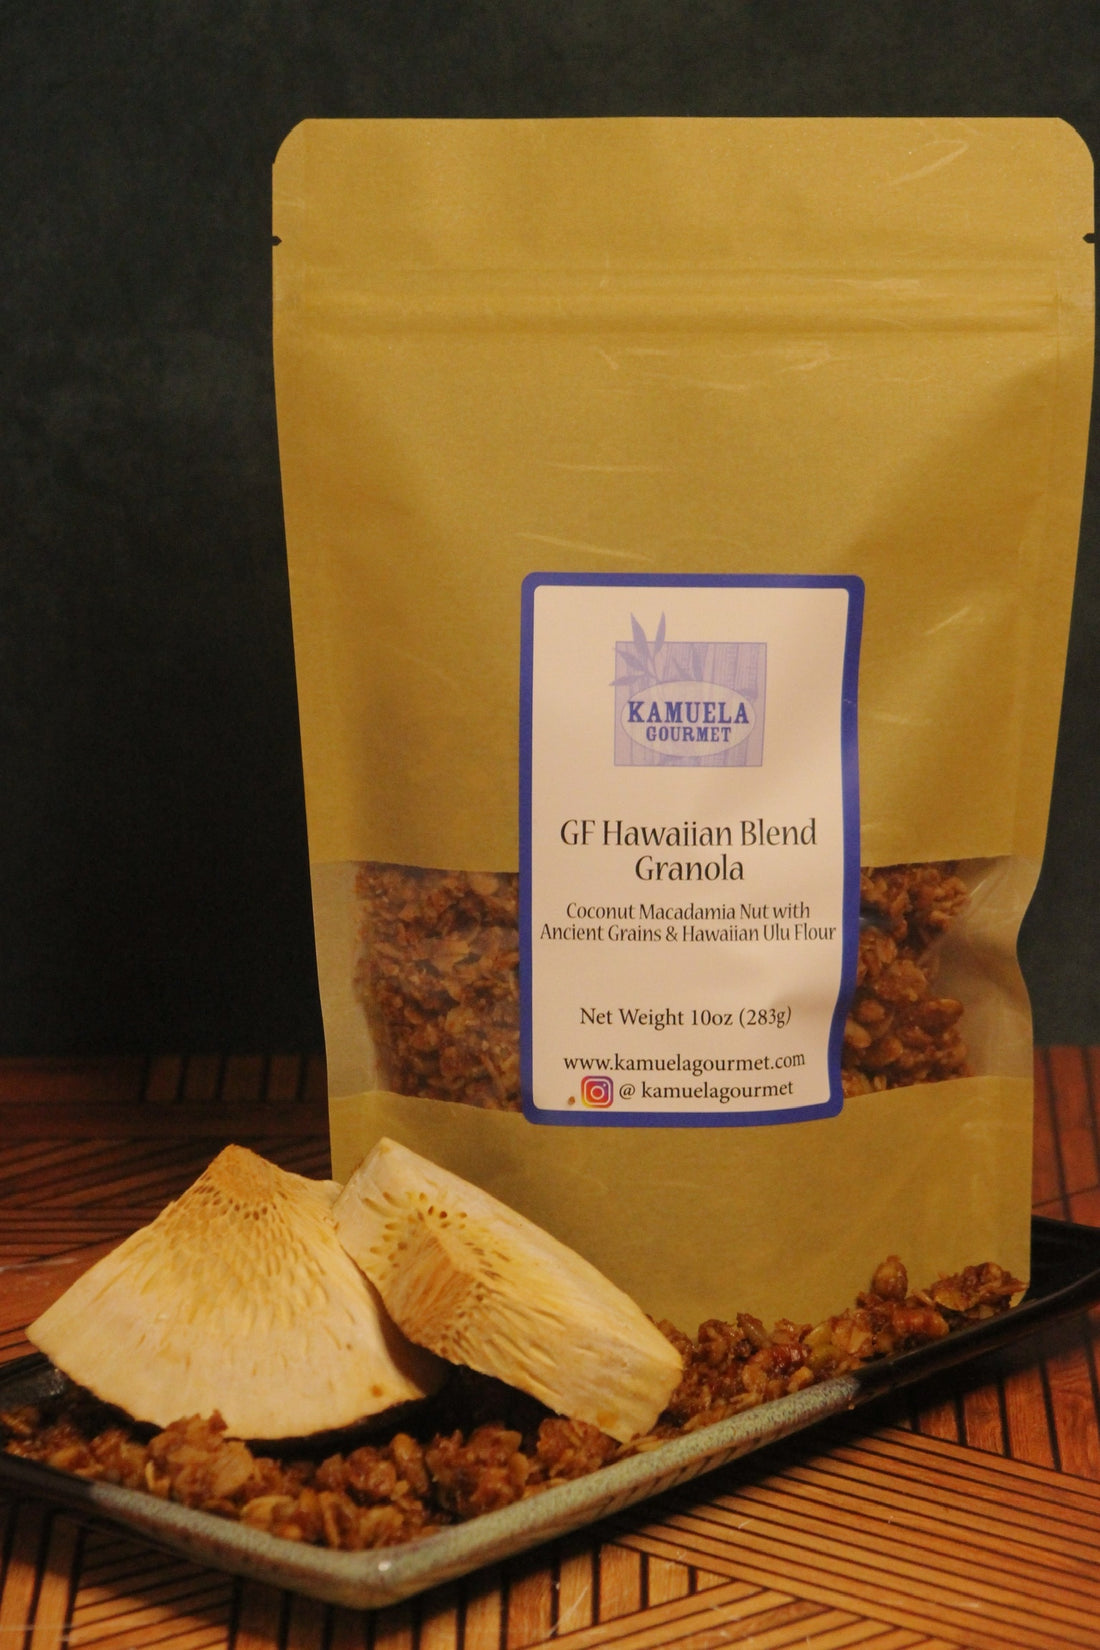 GF HAWAIIAN BLEND GRANOLA - Coconut Macadamia Nut with Ulu Flour 10oz (283G)